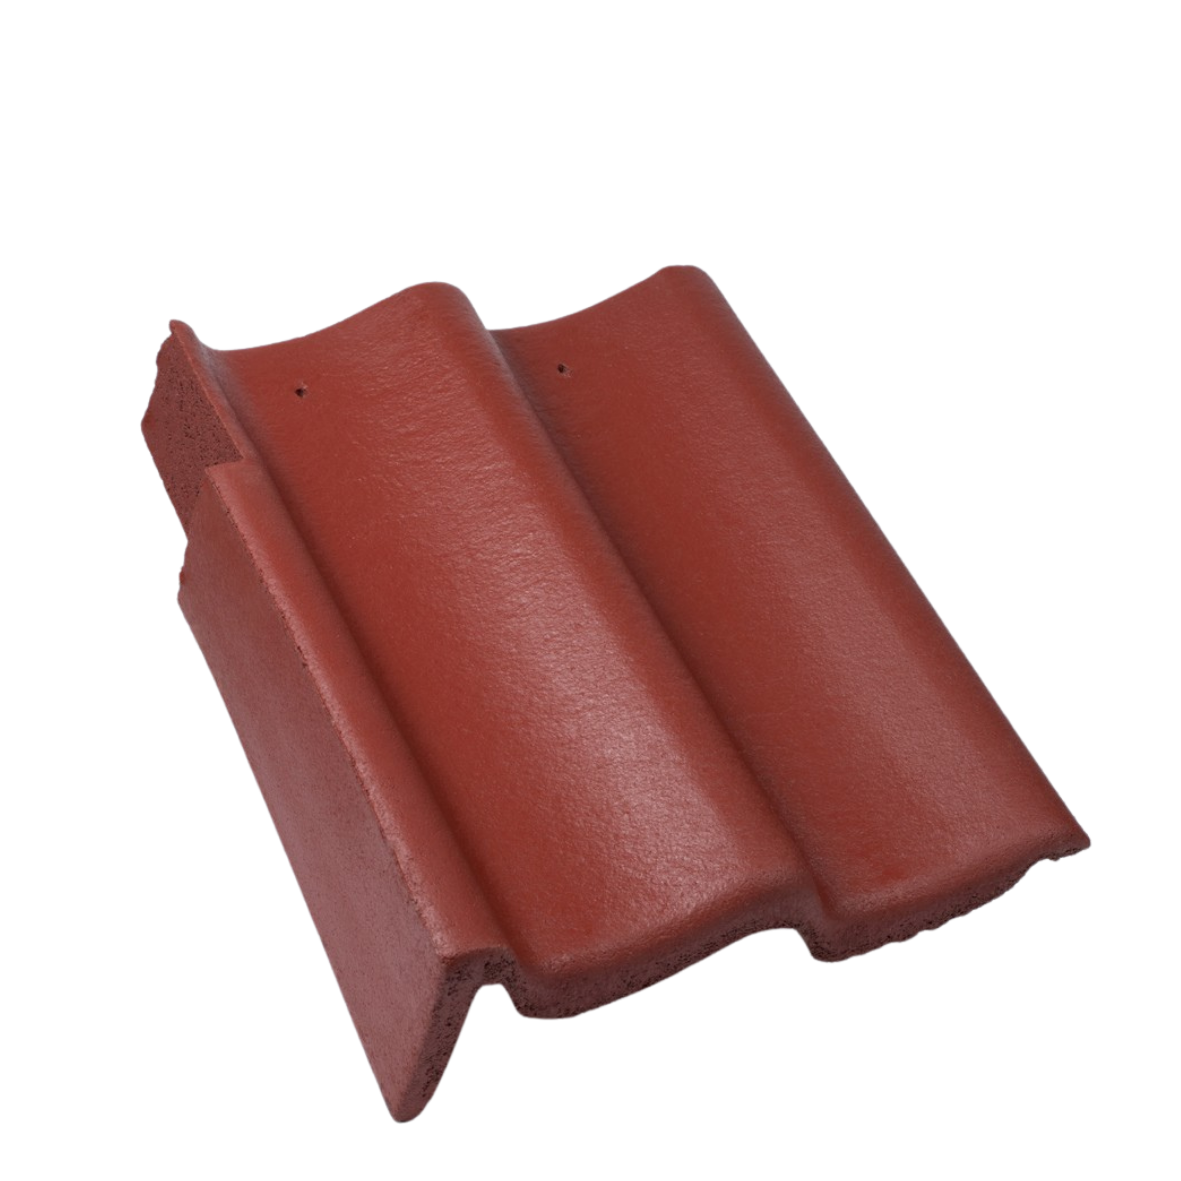 Tigla beton si accesorii - Tigla laterala de stanga Nova rosu coral 420 x 330 mm, maxbau.ro